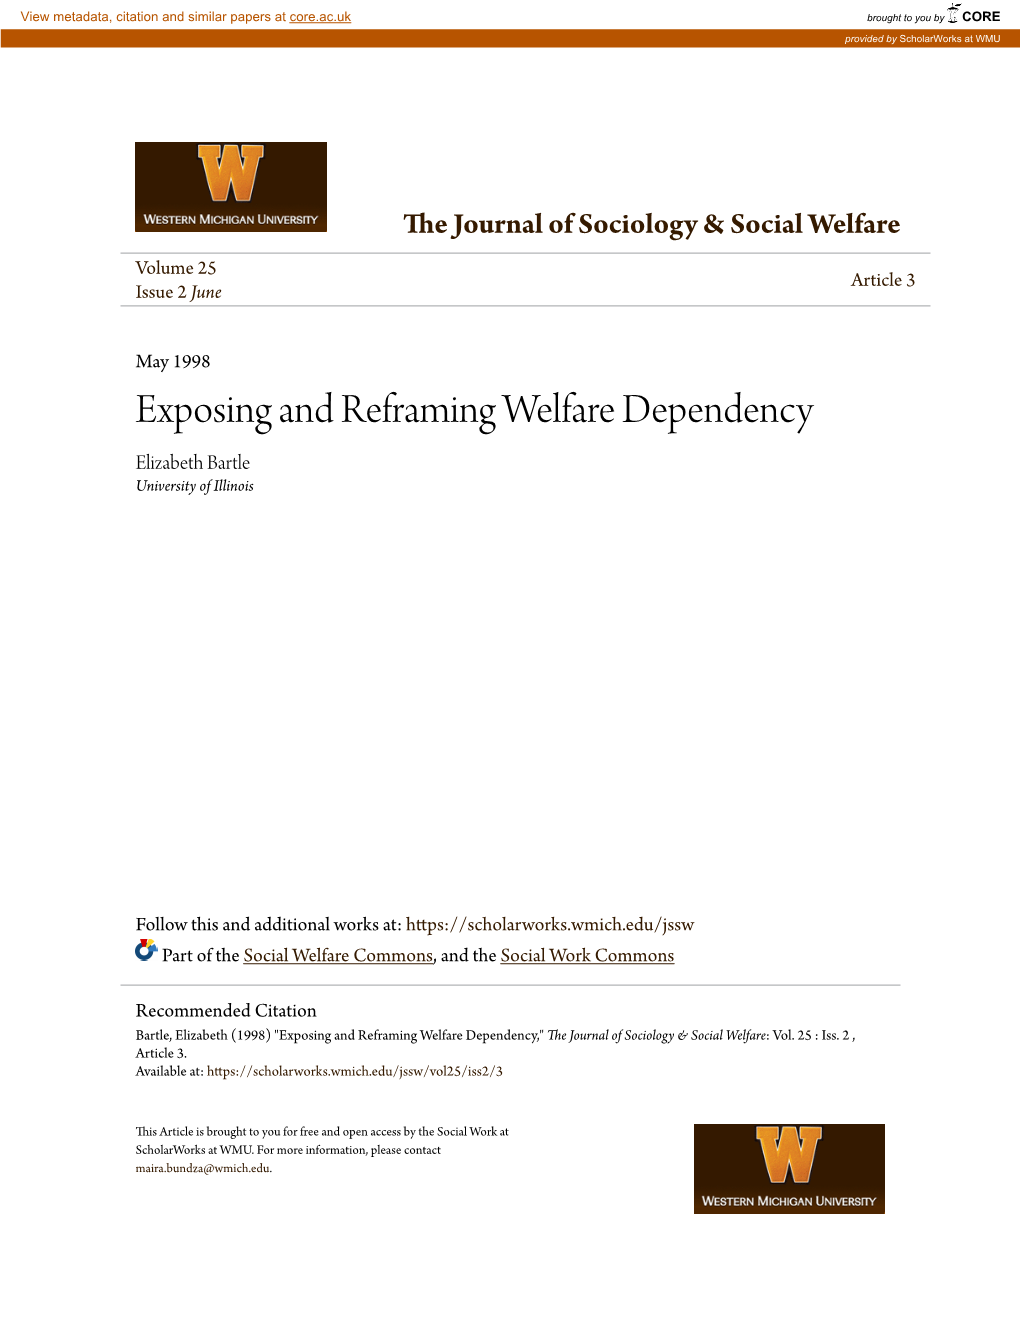 Exposing and Reframing Welfare Dependency Elizabeth Bartle University of Illinois